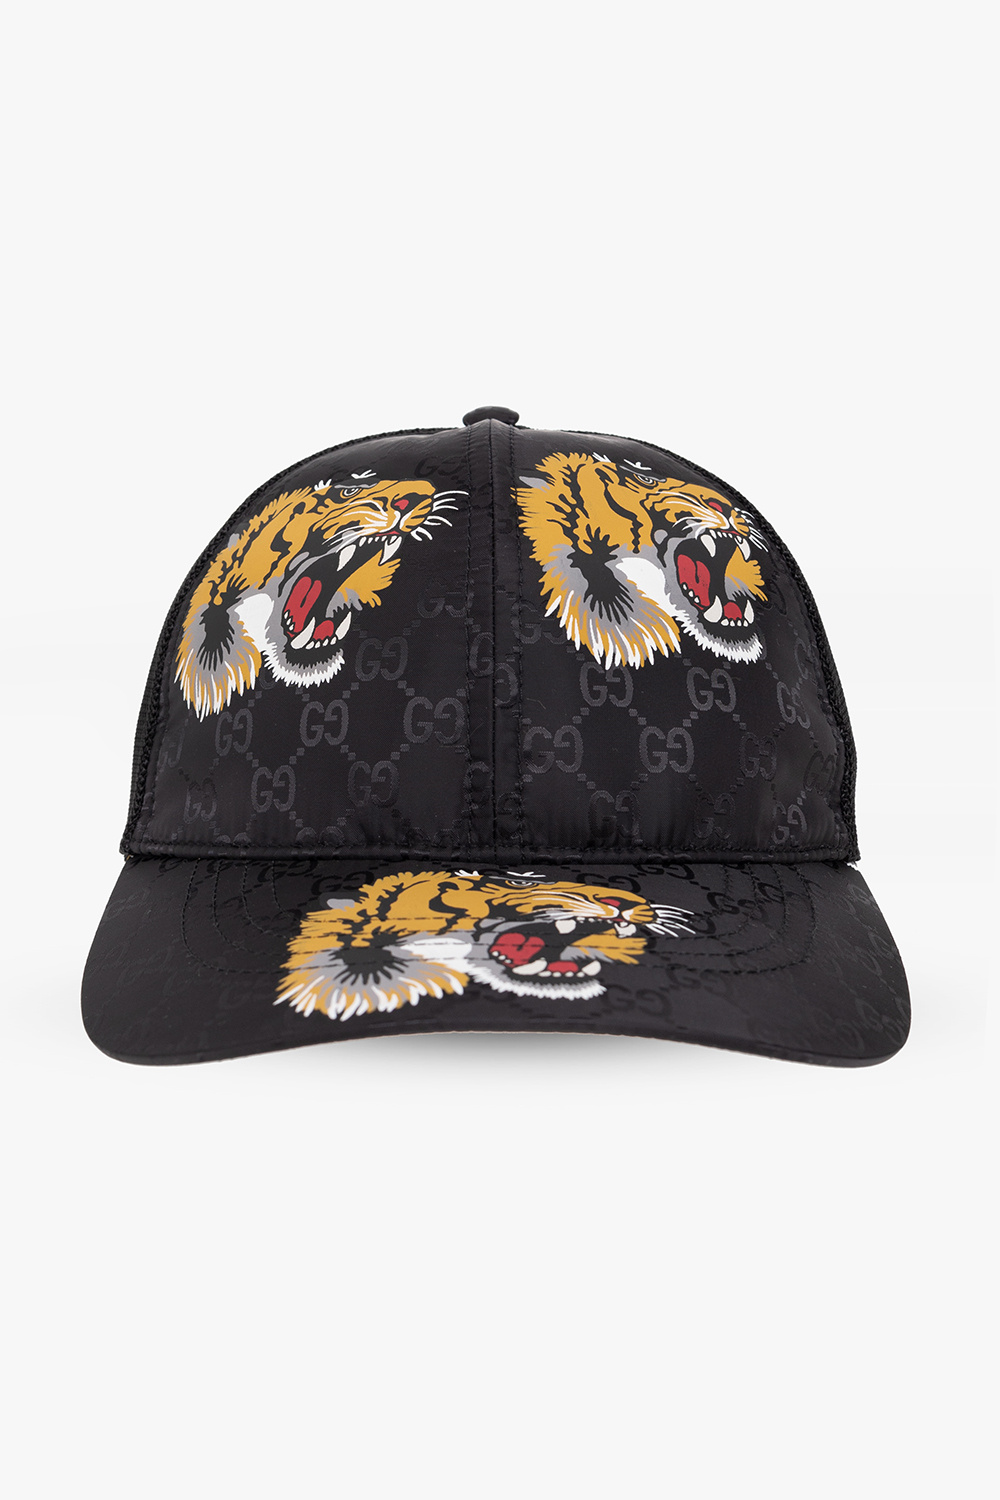 IetpShops 中国- 黑色棒球帽Gucci - Gucci Marmont Chain Mini Bag